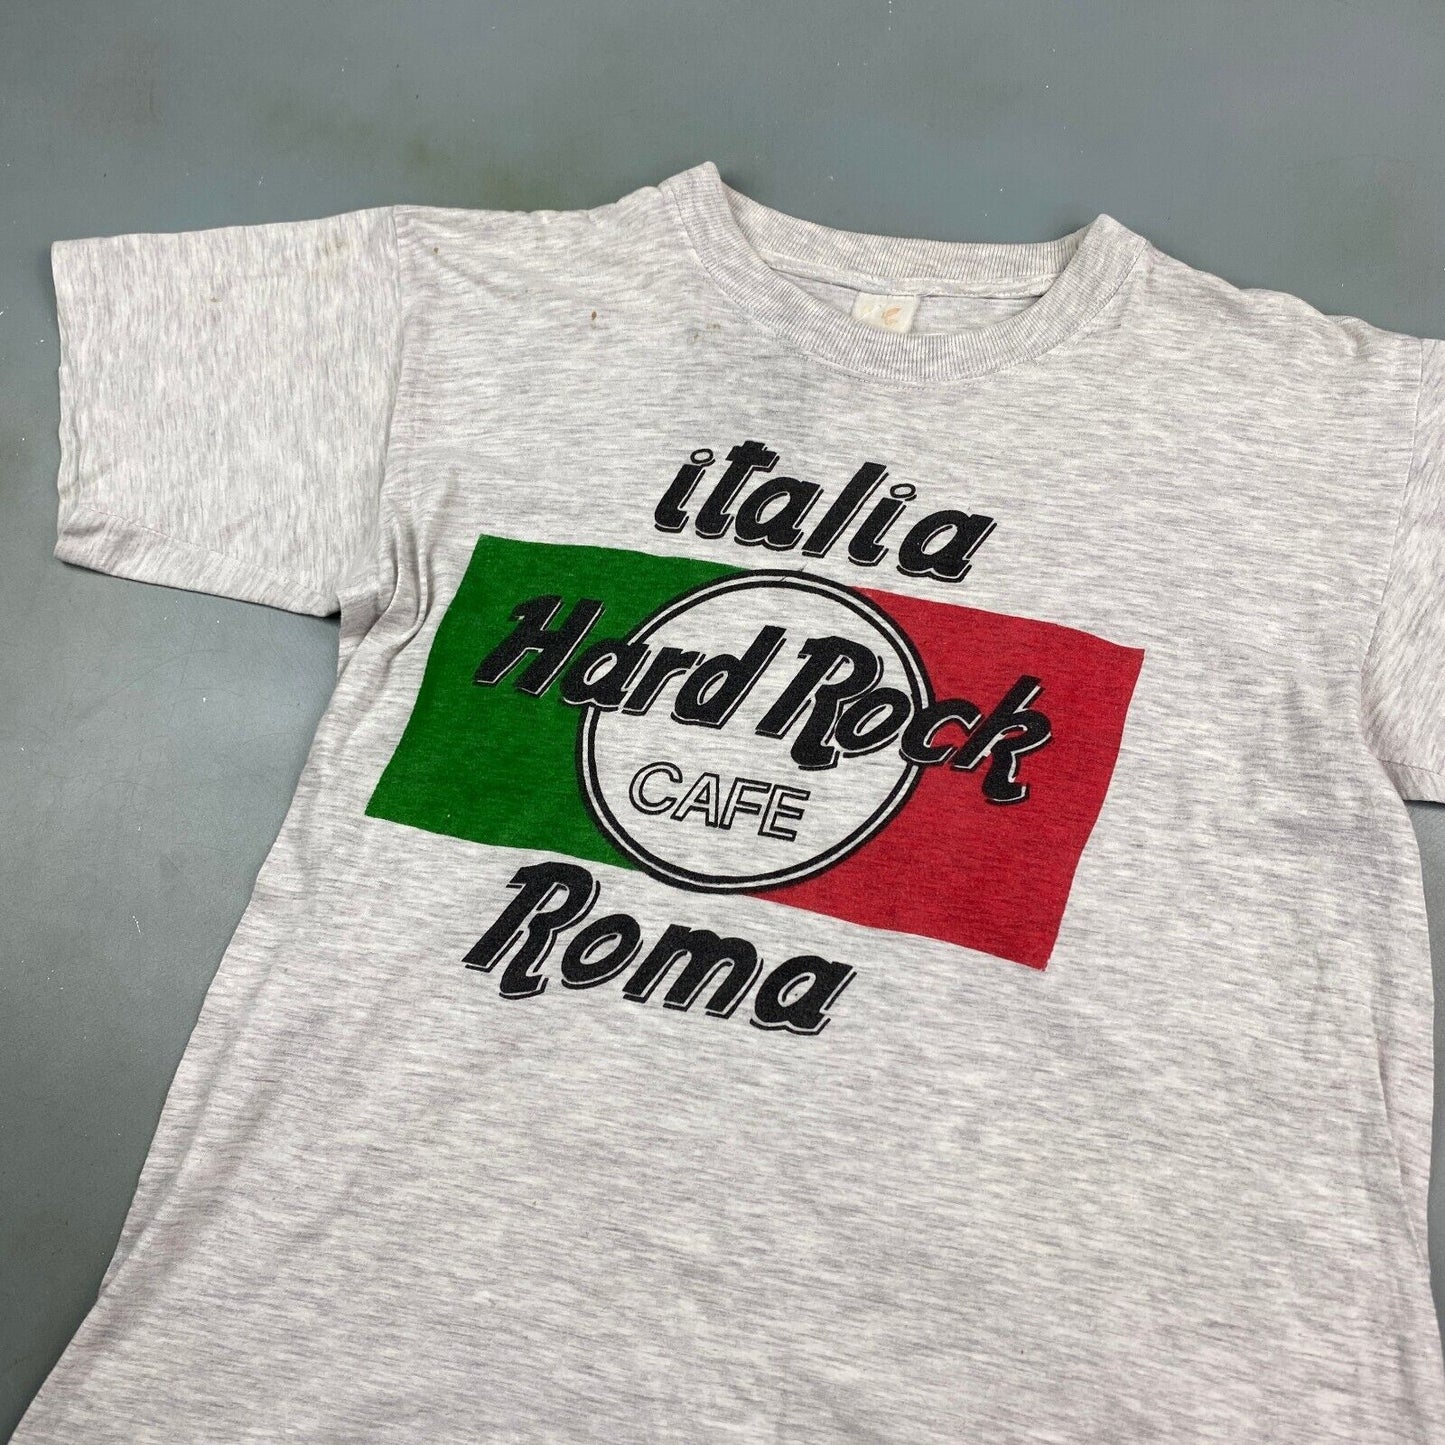 VINTAGE 90s Hard Rock Cafe Italia Roma T-Shirt sz Medium Men